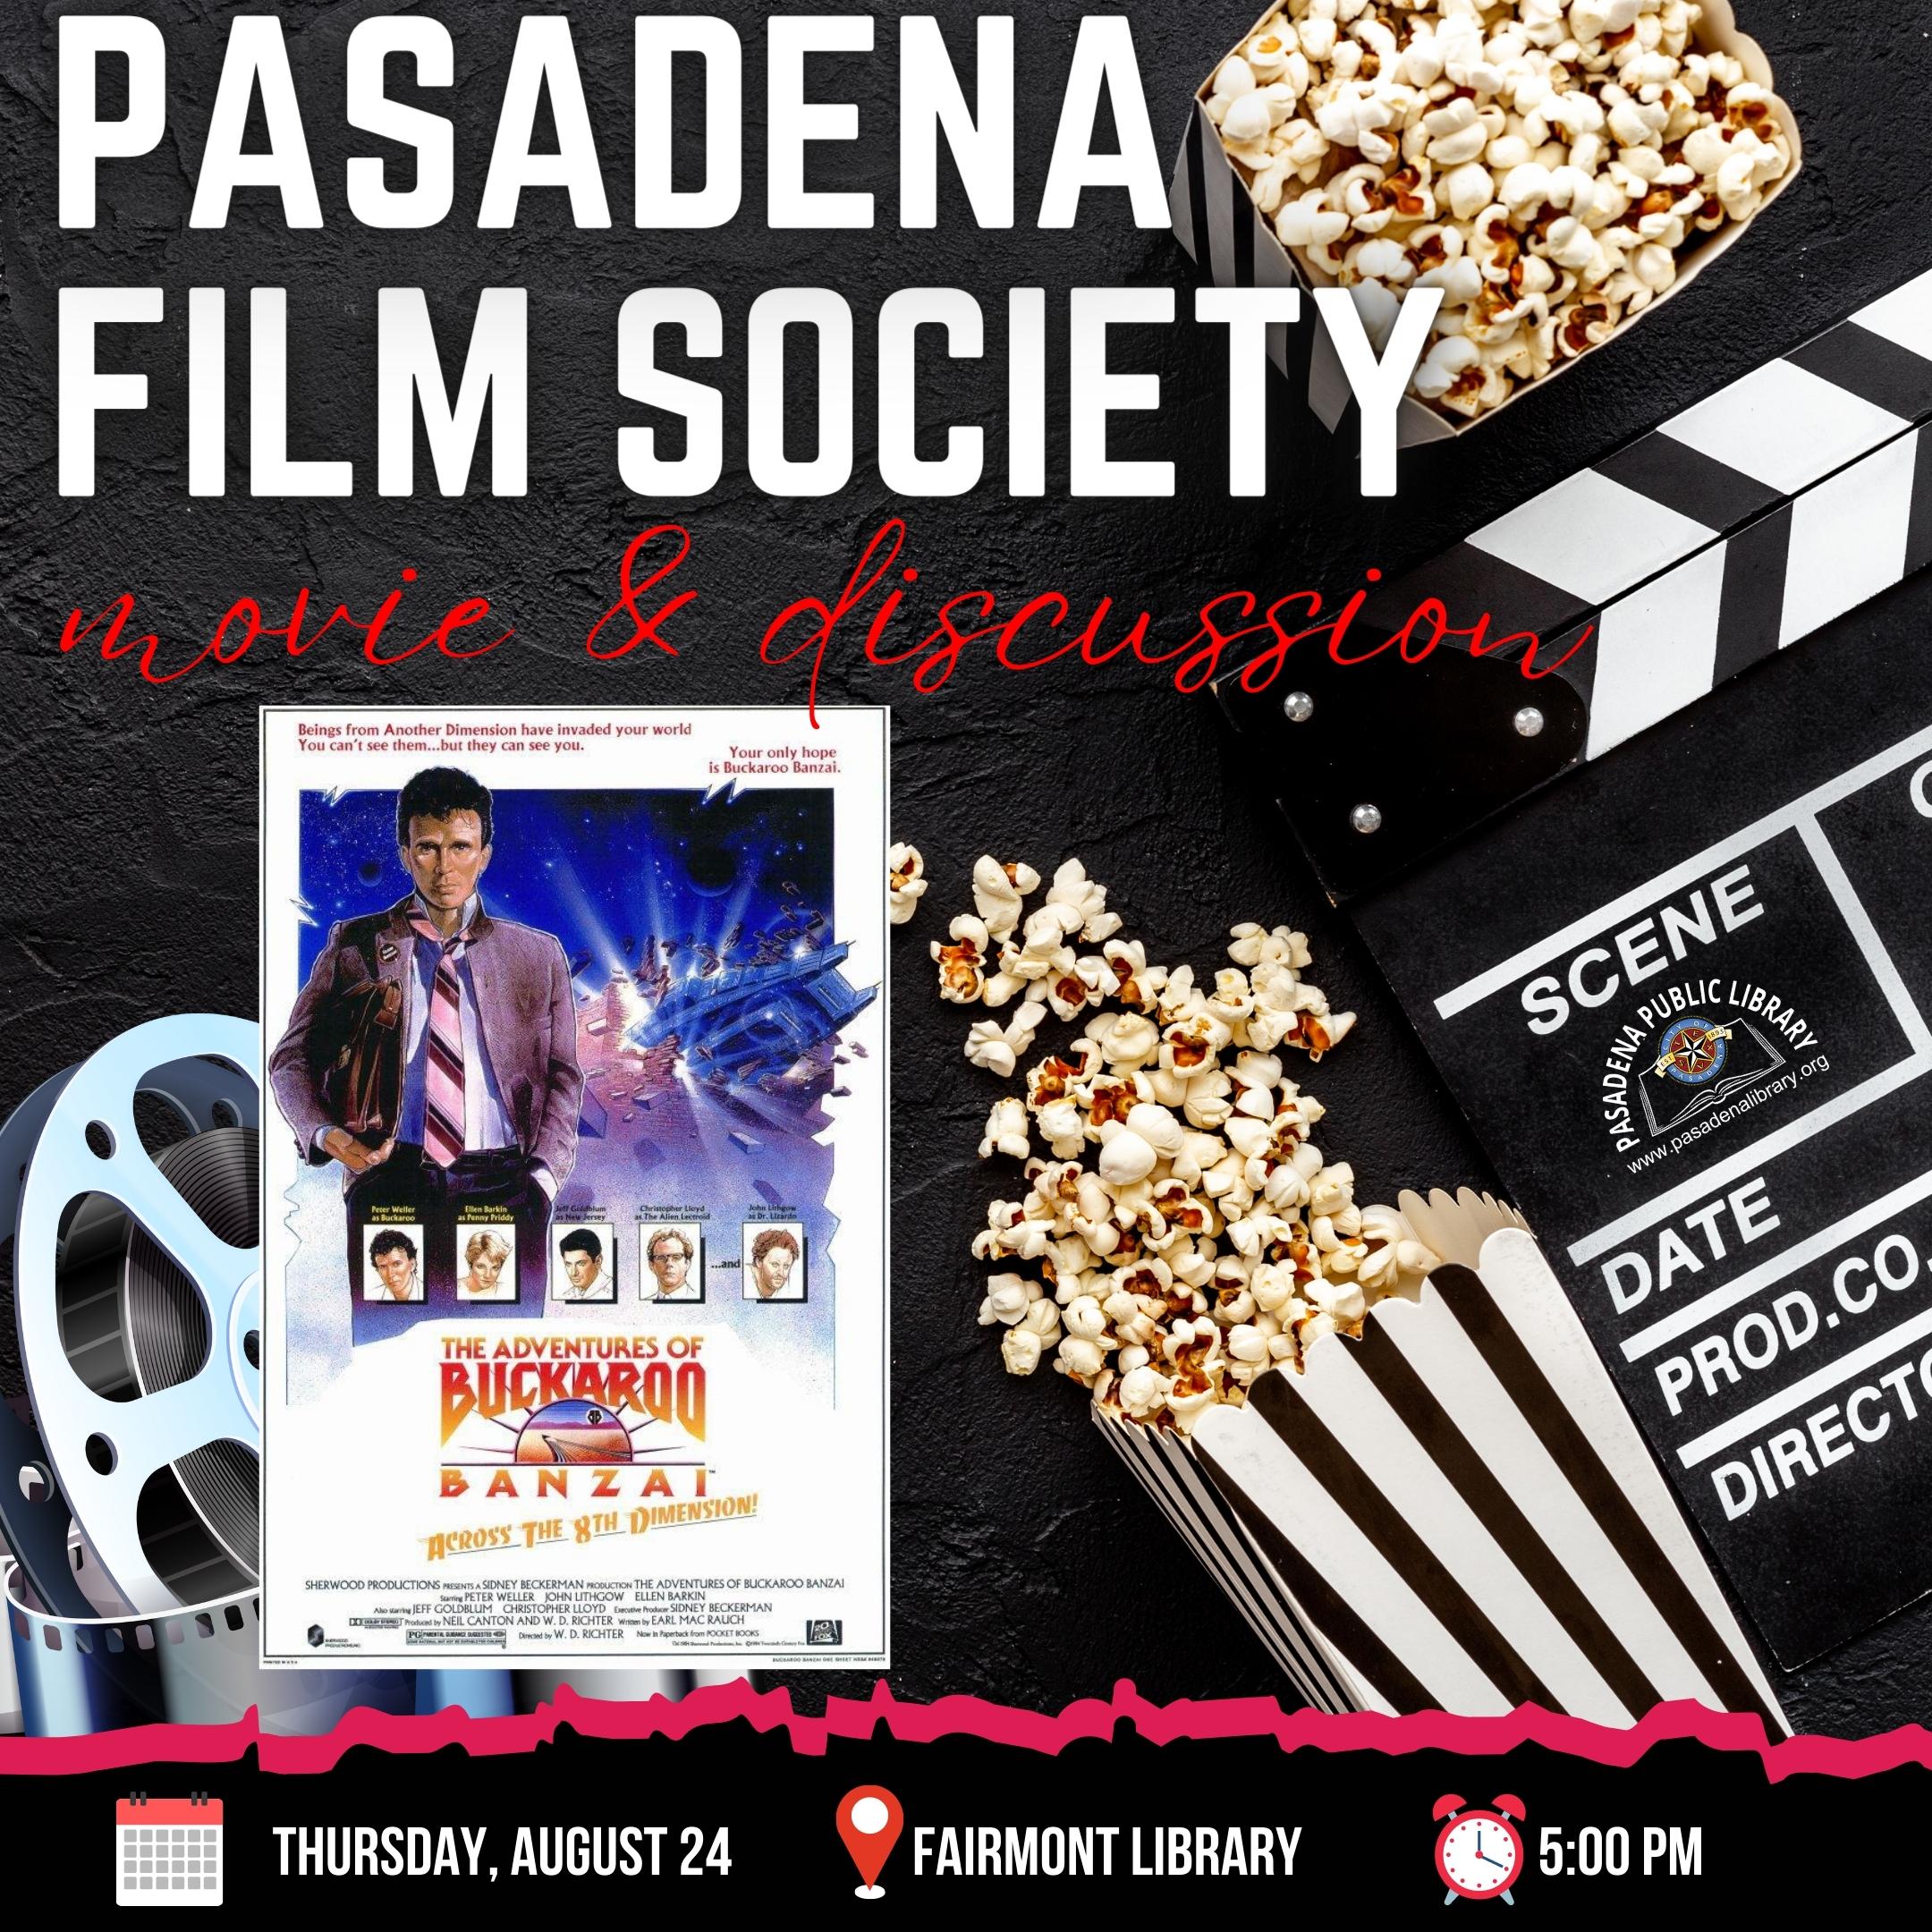 Pasadena Film Society is showing The Adventures of Buckaroo Banzai